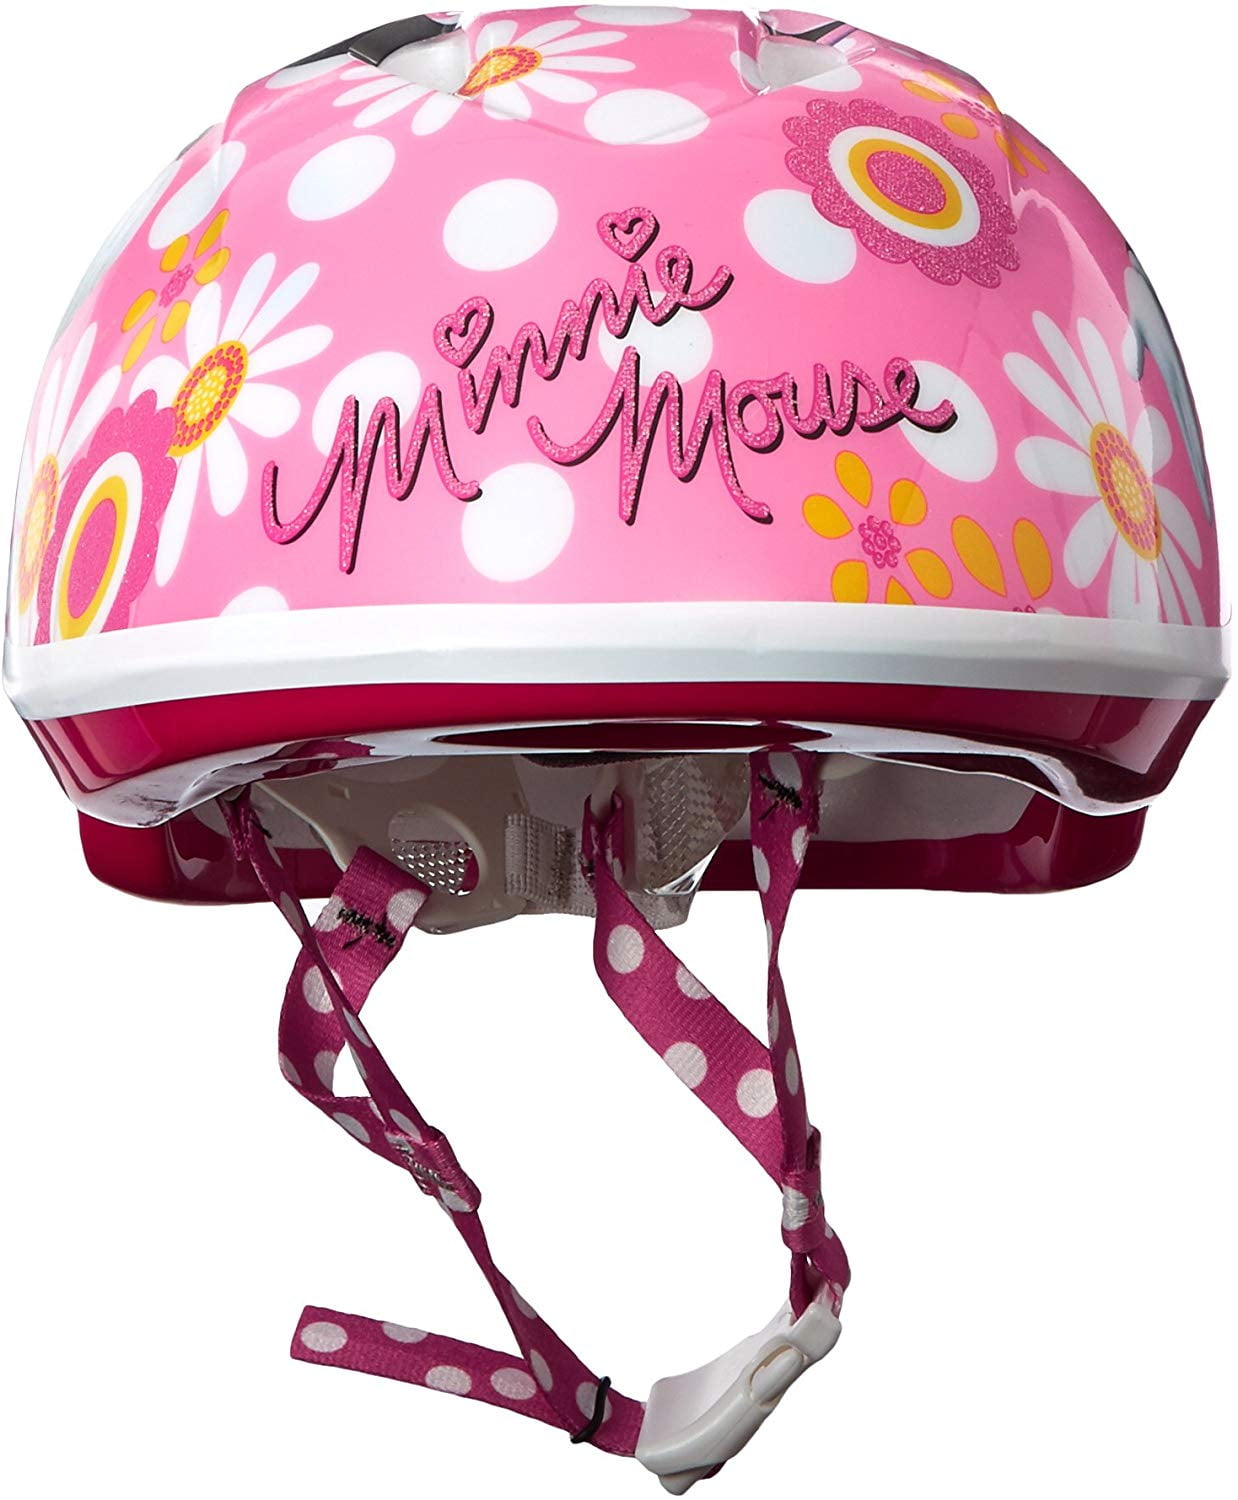 NEW Bell Disney Minnie Mouse Bike Skateboard Helmet Pink Toddler Kids 3-5 Years. 